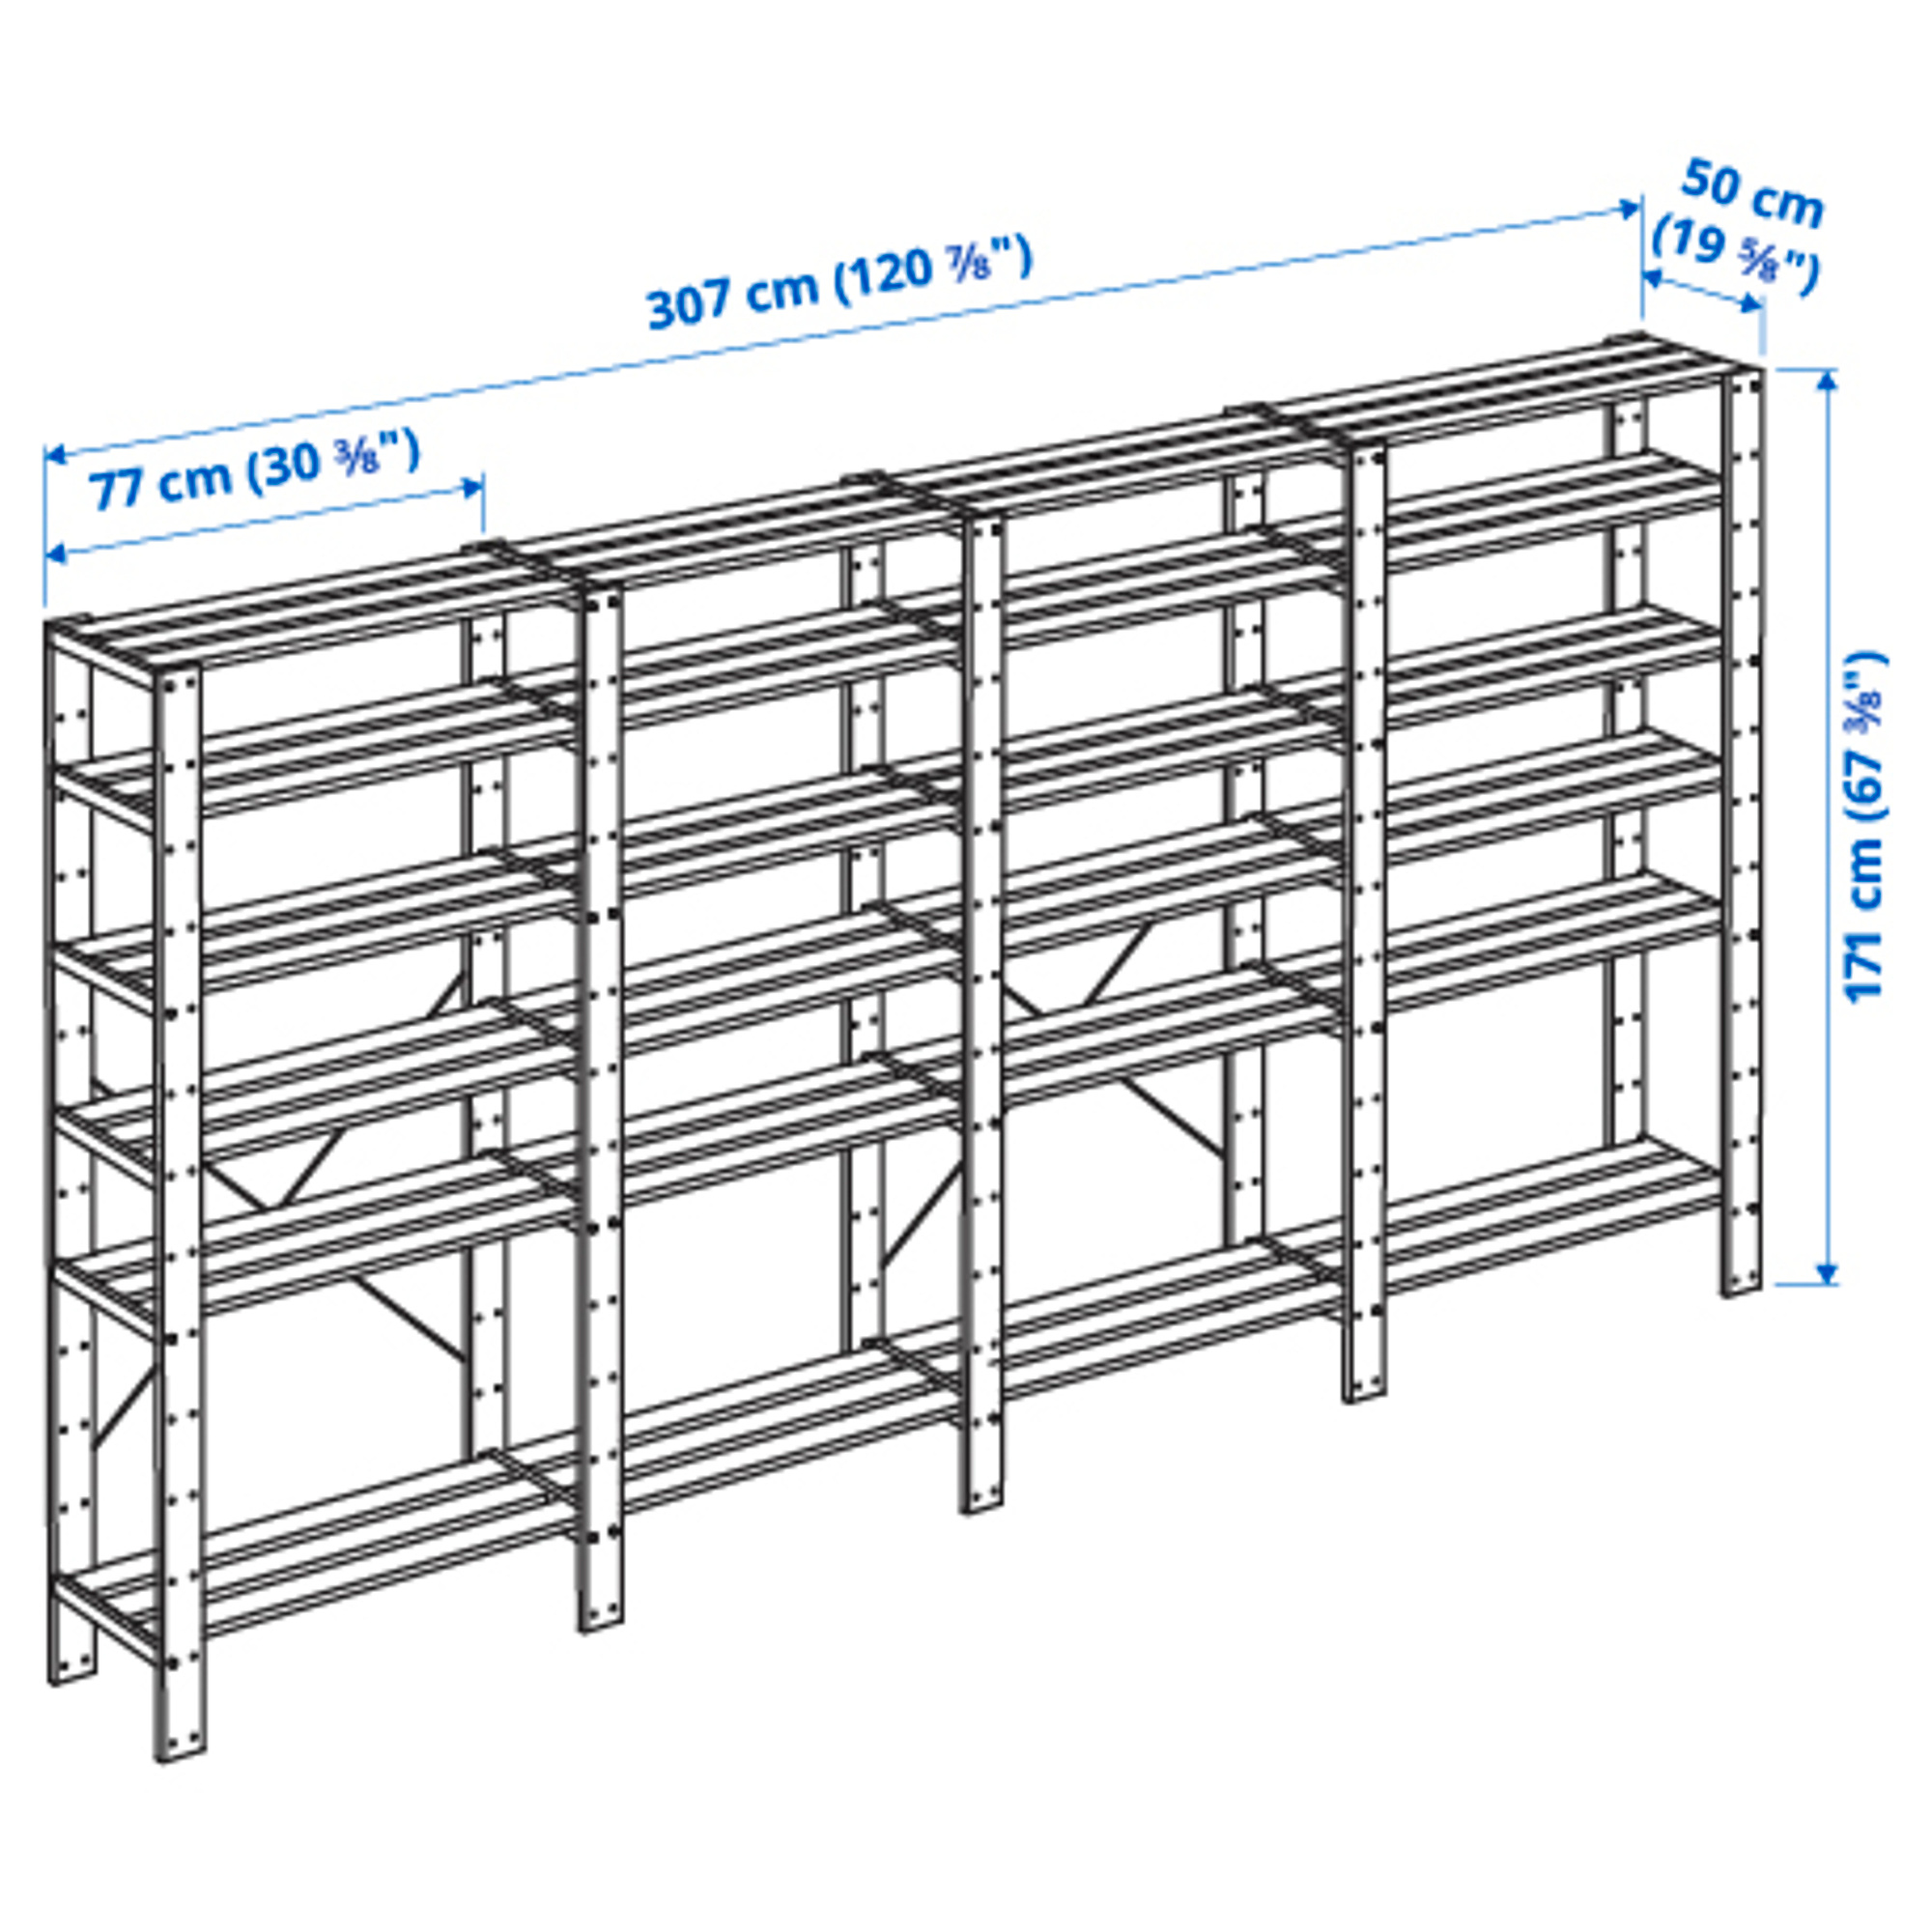 HEJNE 4 sections/shelves